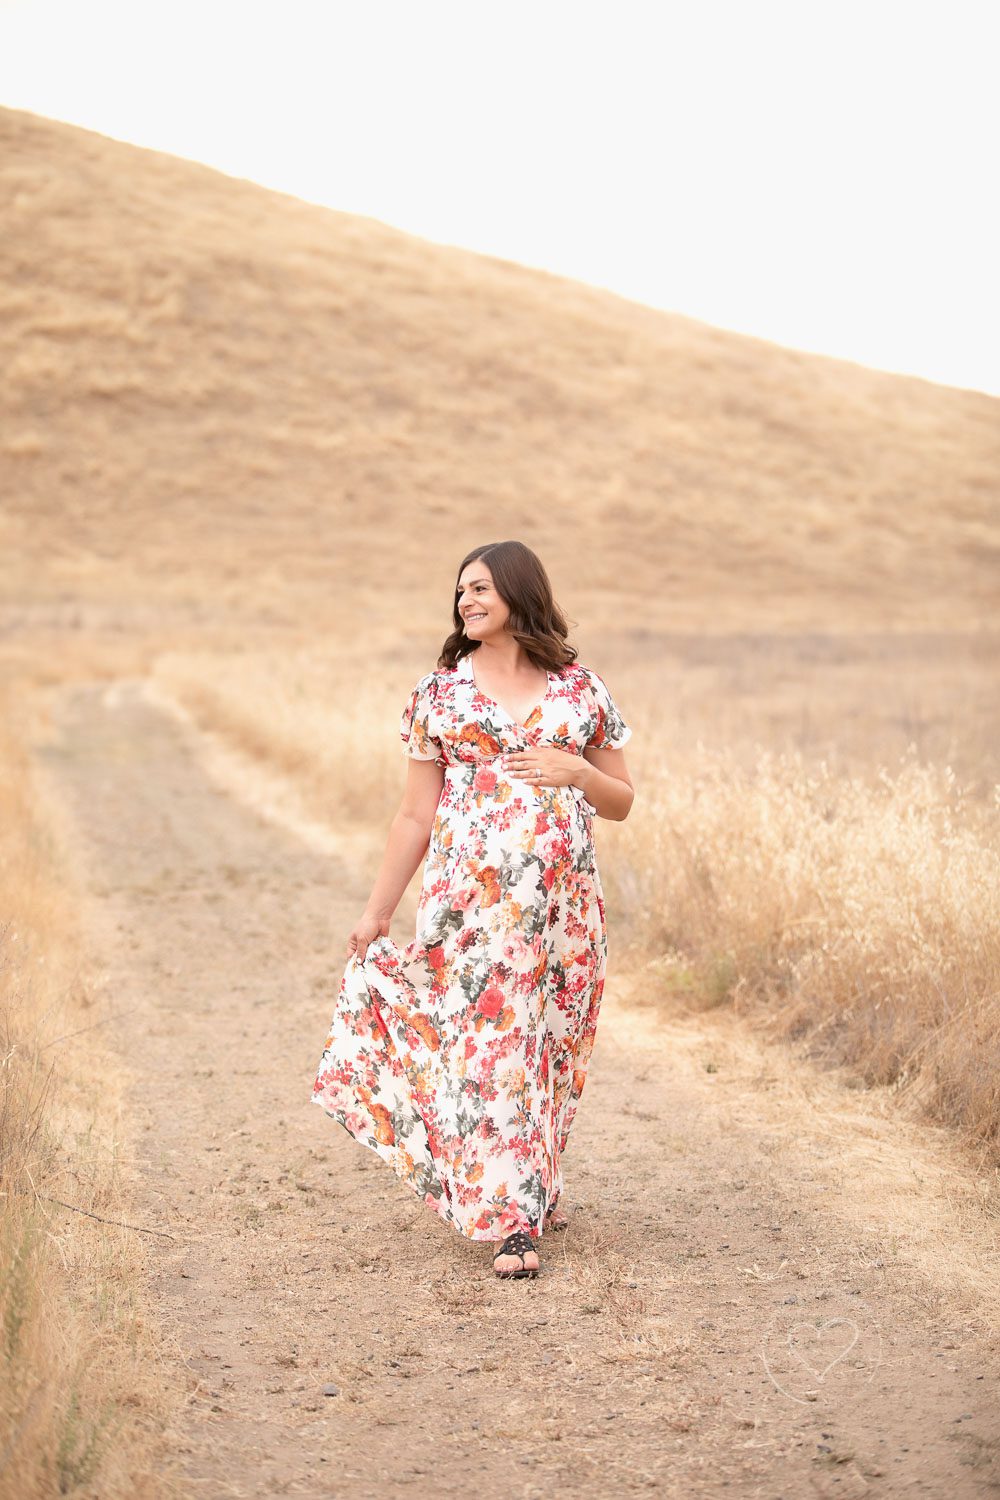 maternity, walking in floral dress smiling, fresno, clovis, photographer